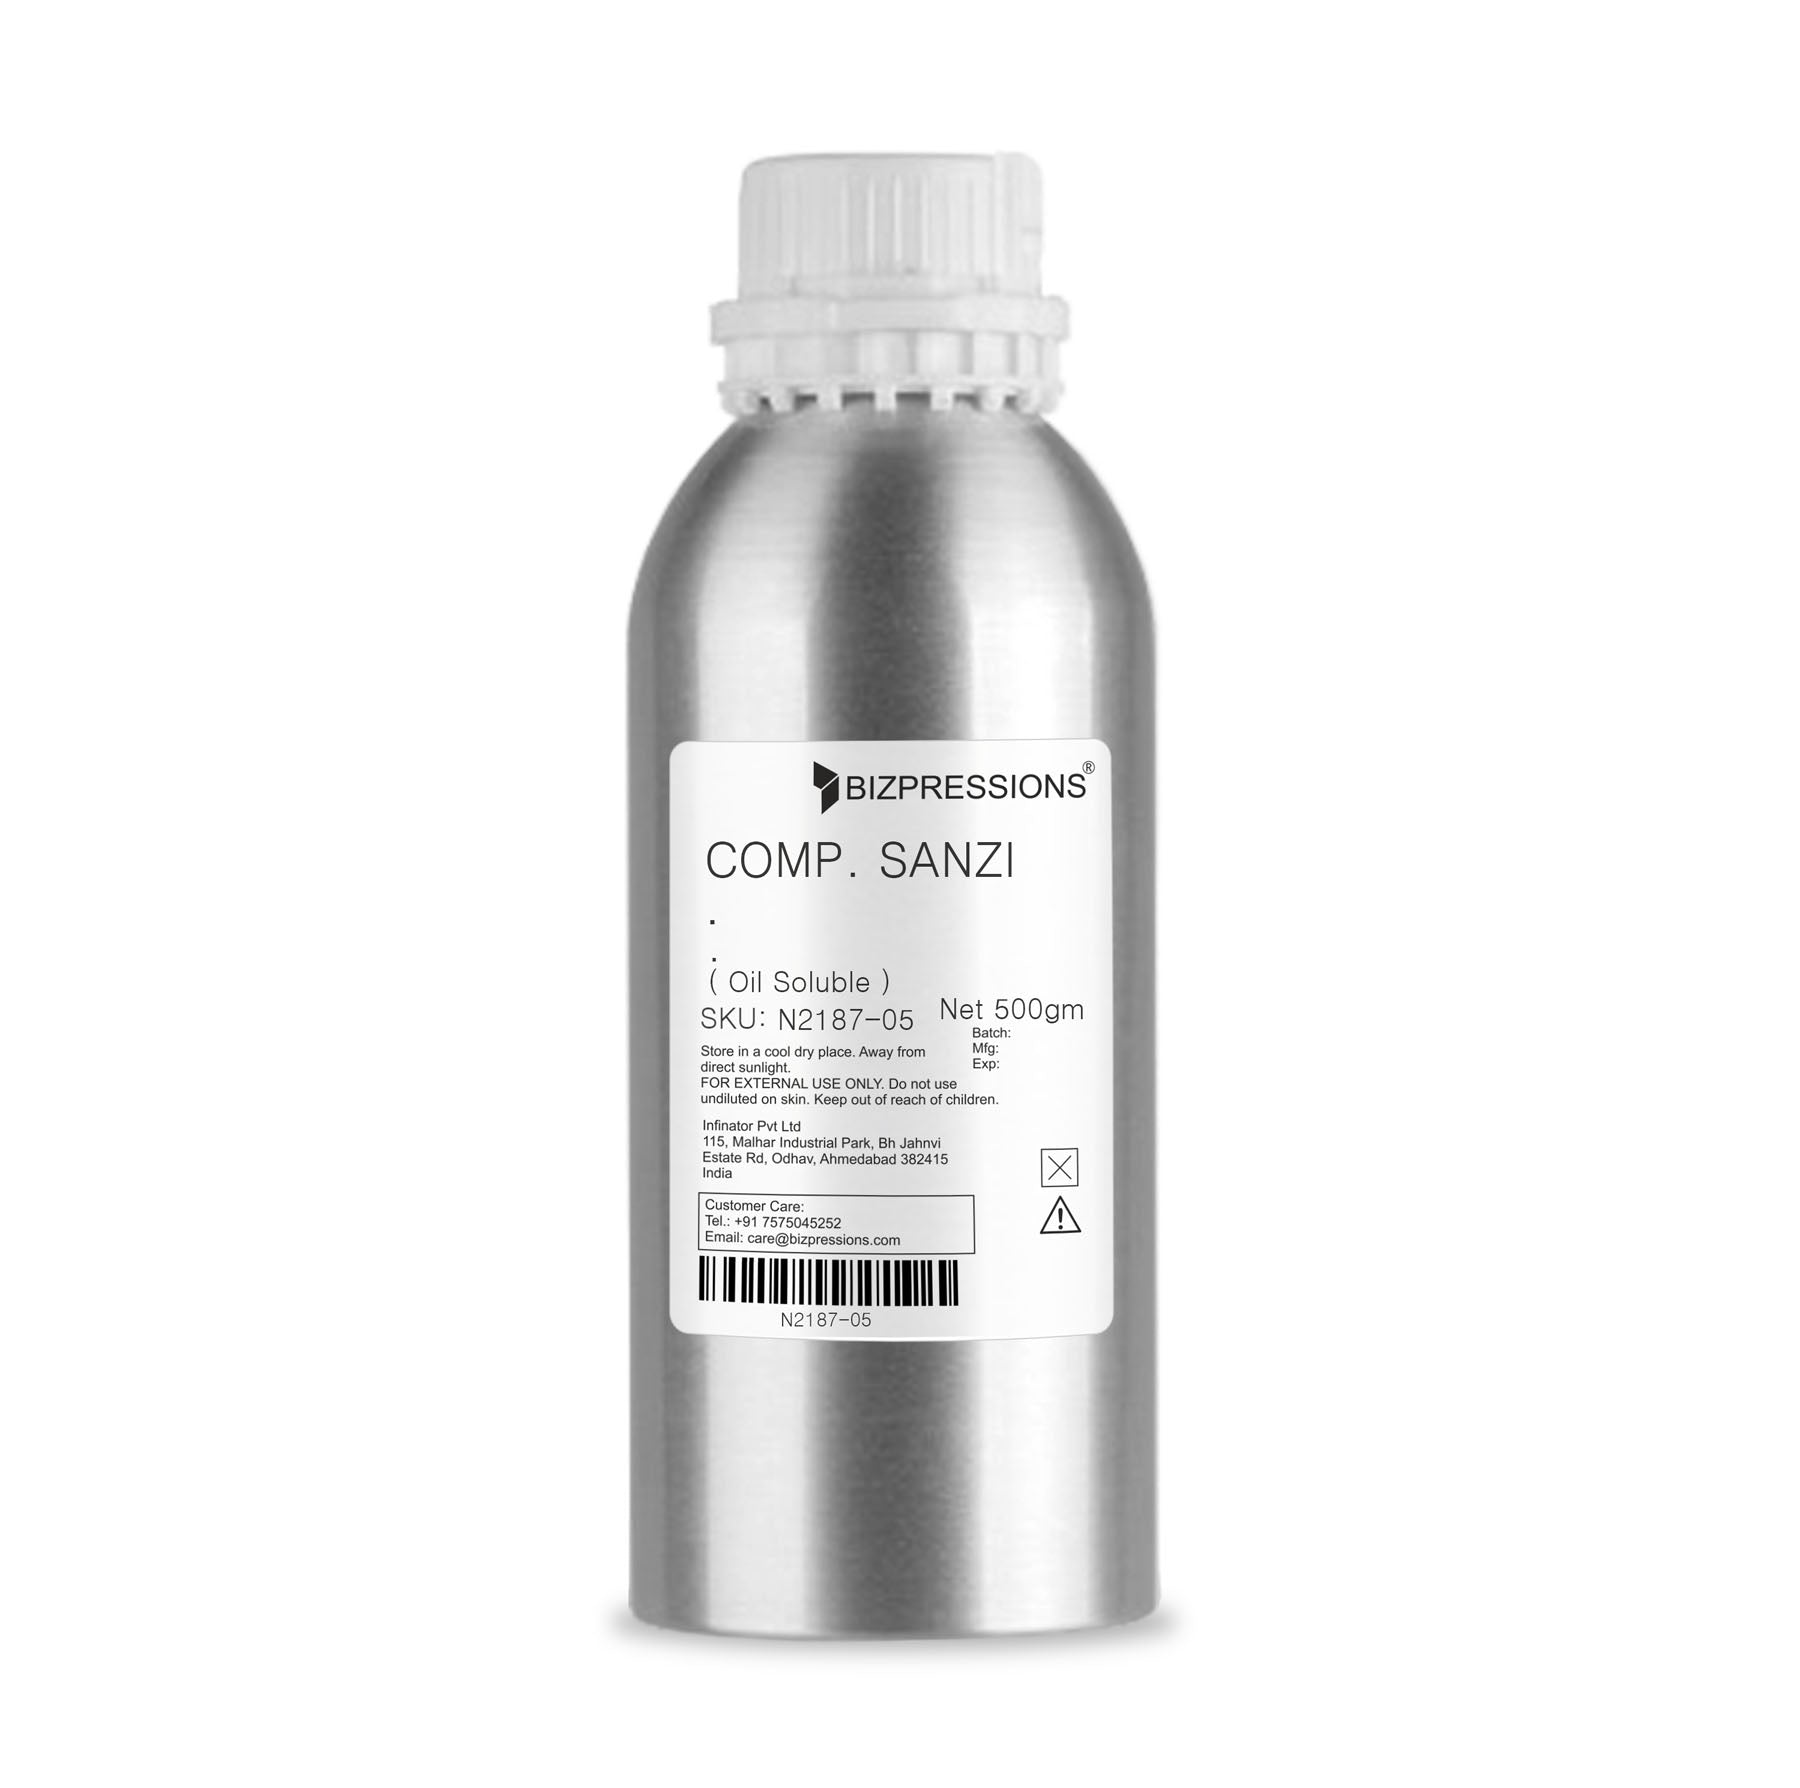 COMP. SANZI - Fragrance ( Oil Soluble ) - 500 gm